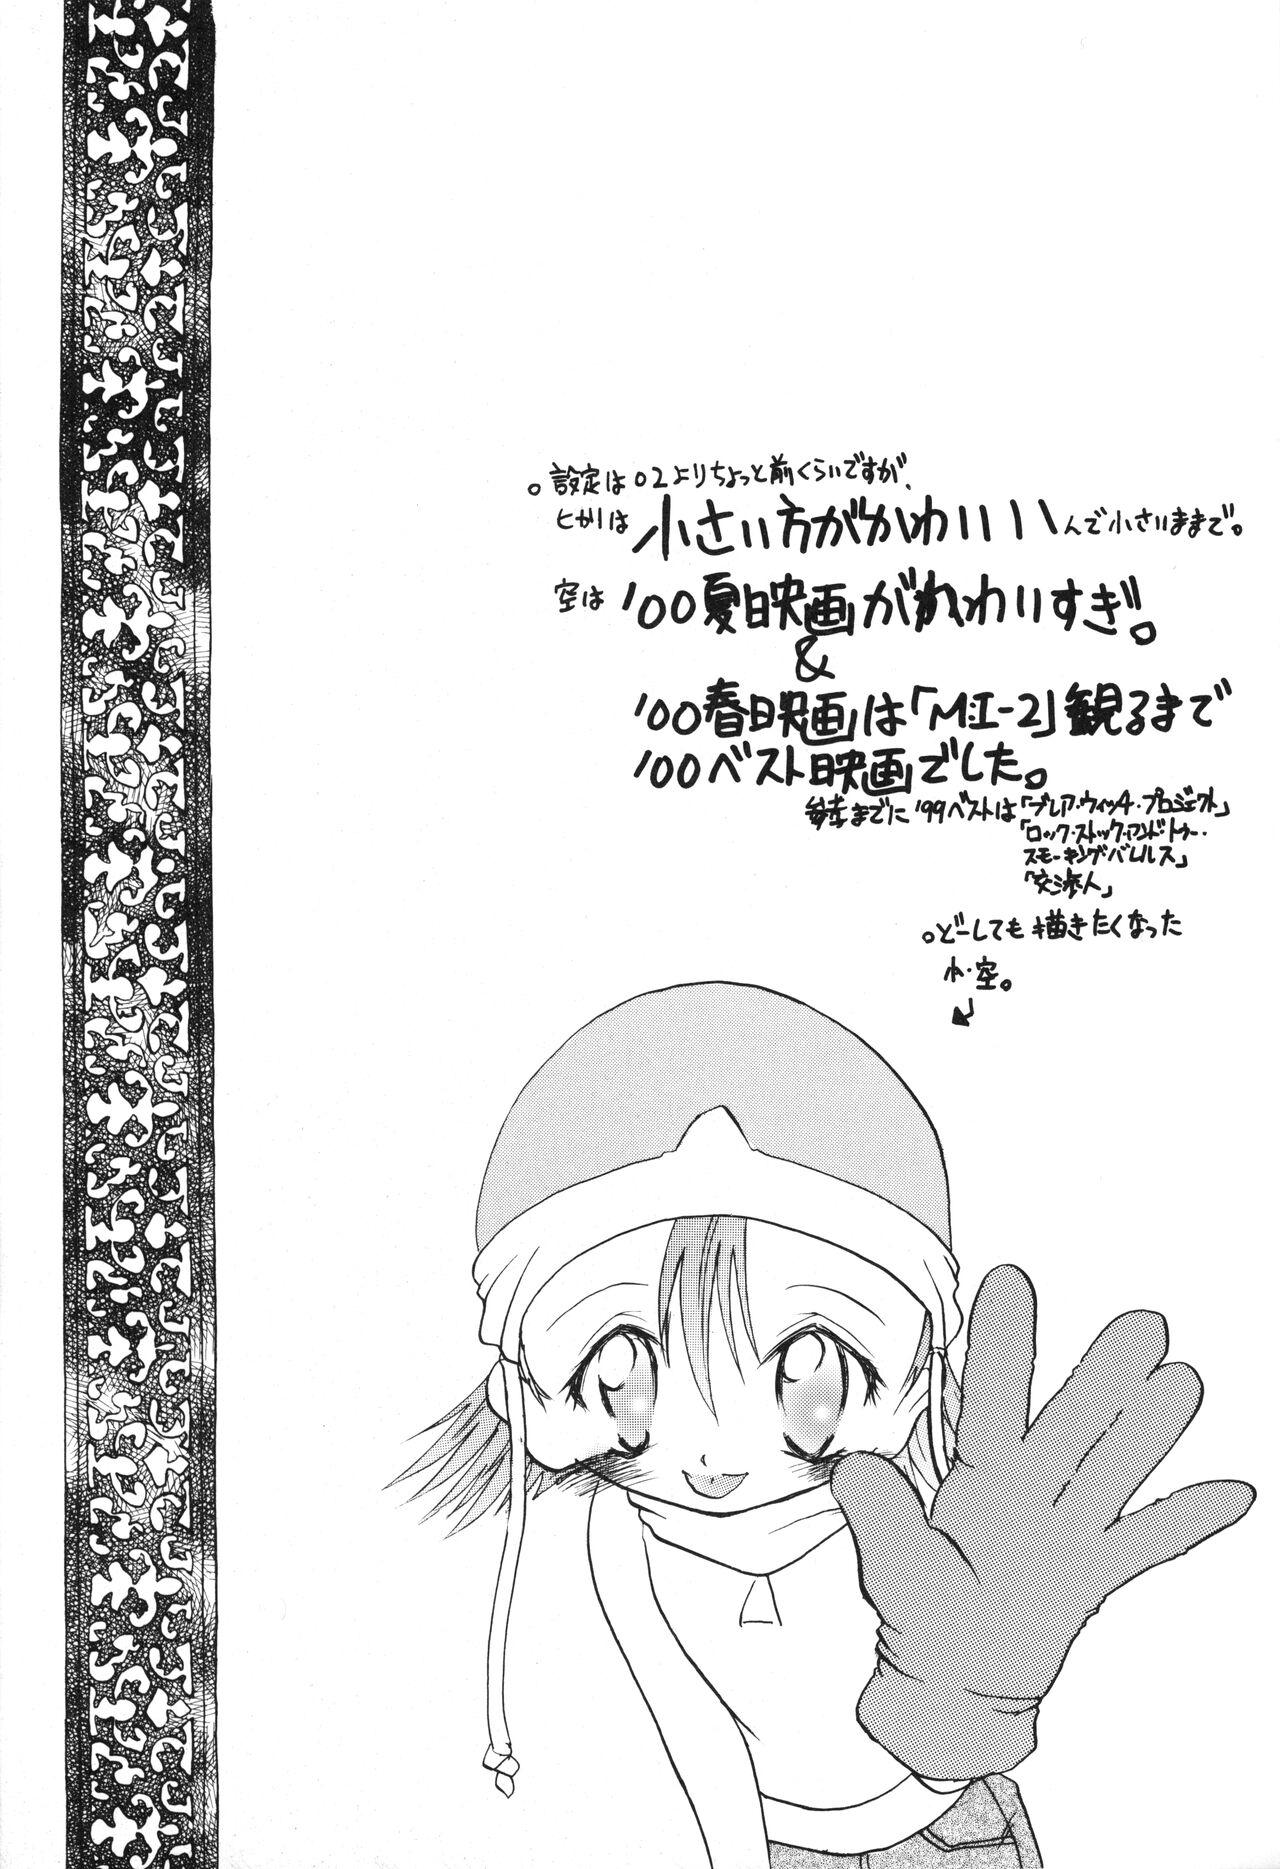 Nudity Get Sweet ”A” Low Phone ”DIGIMON ADVENTURE” - Digimon Cartoon - Page 6